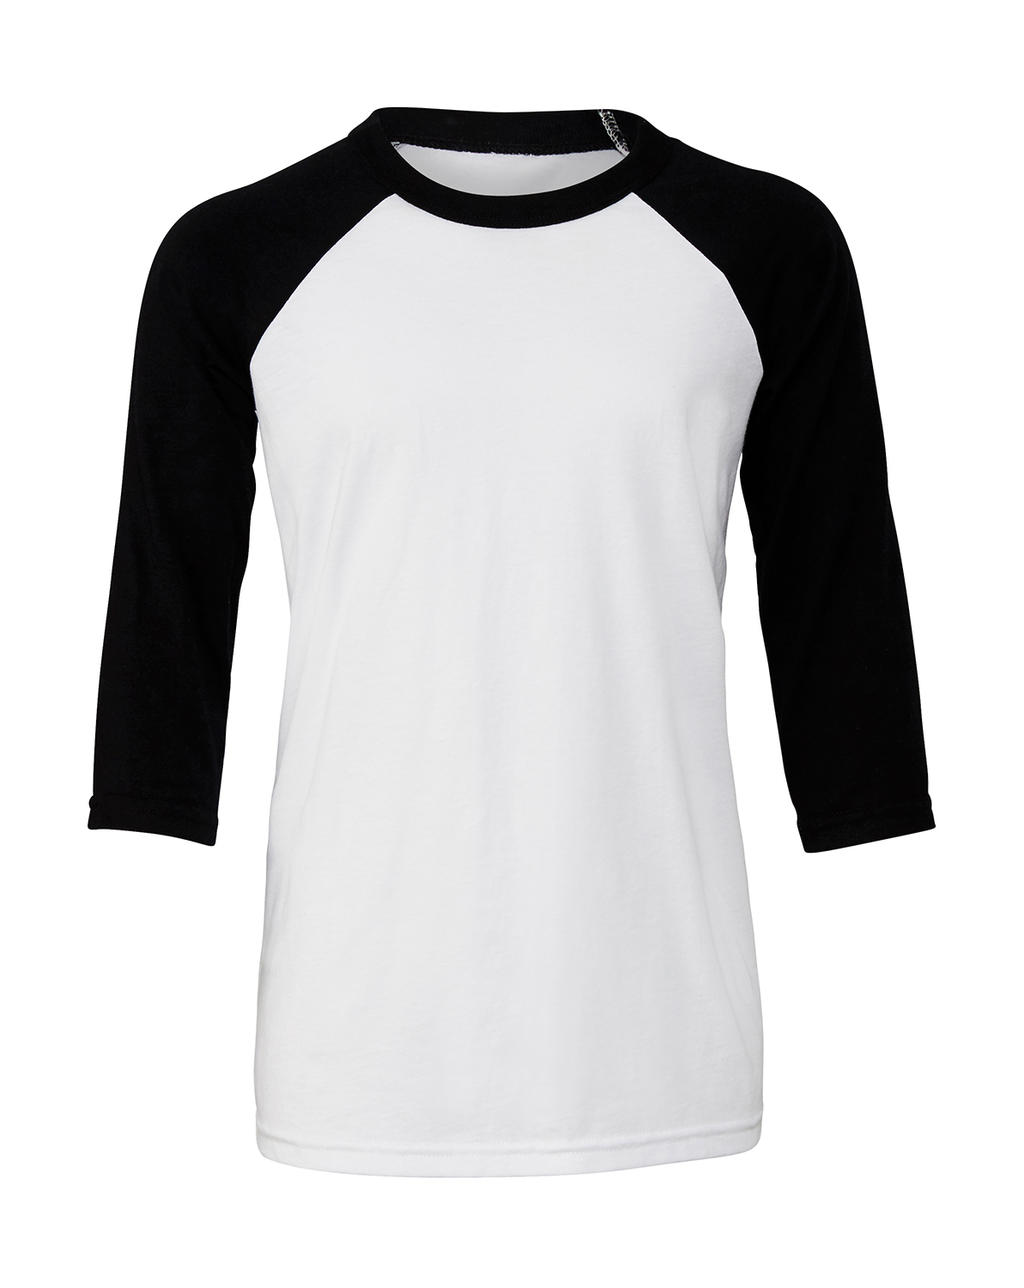 Detské tričko s baseballovými 3/4 rukávmi - white/black